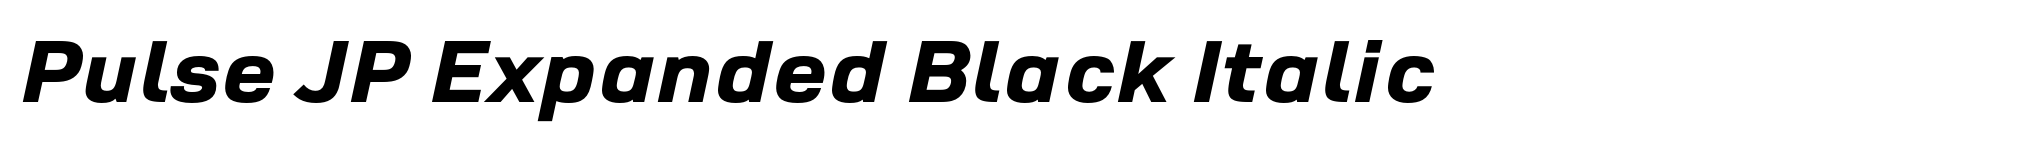 Pulse JP Expanded Black Italic image